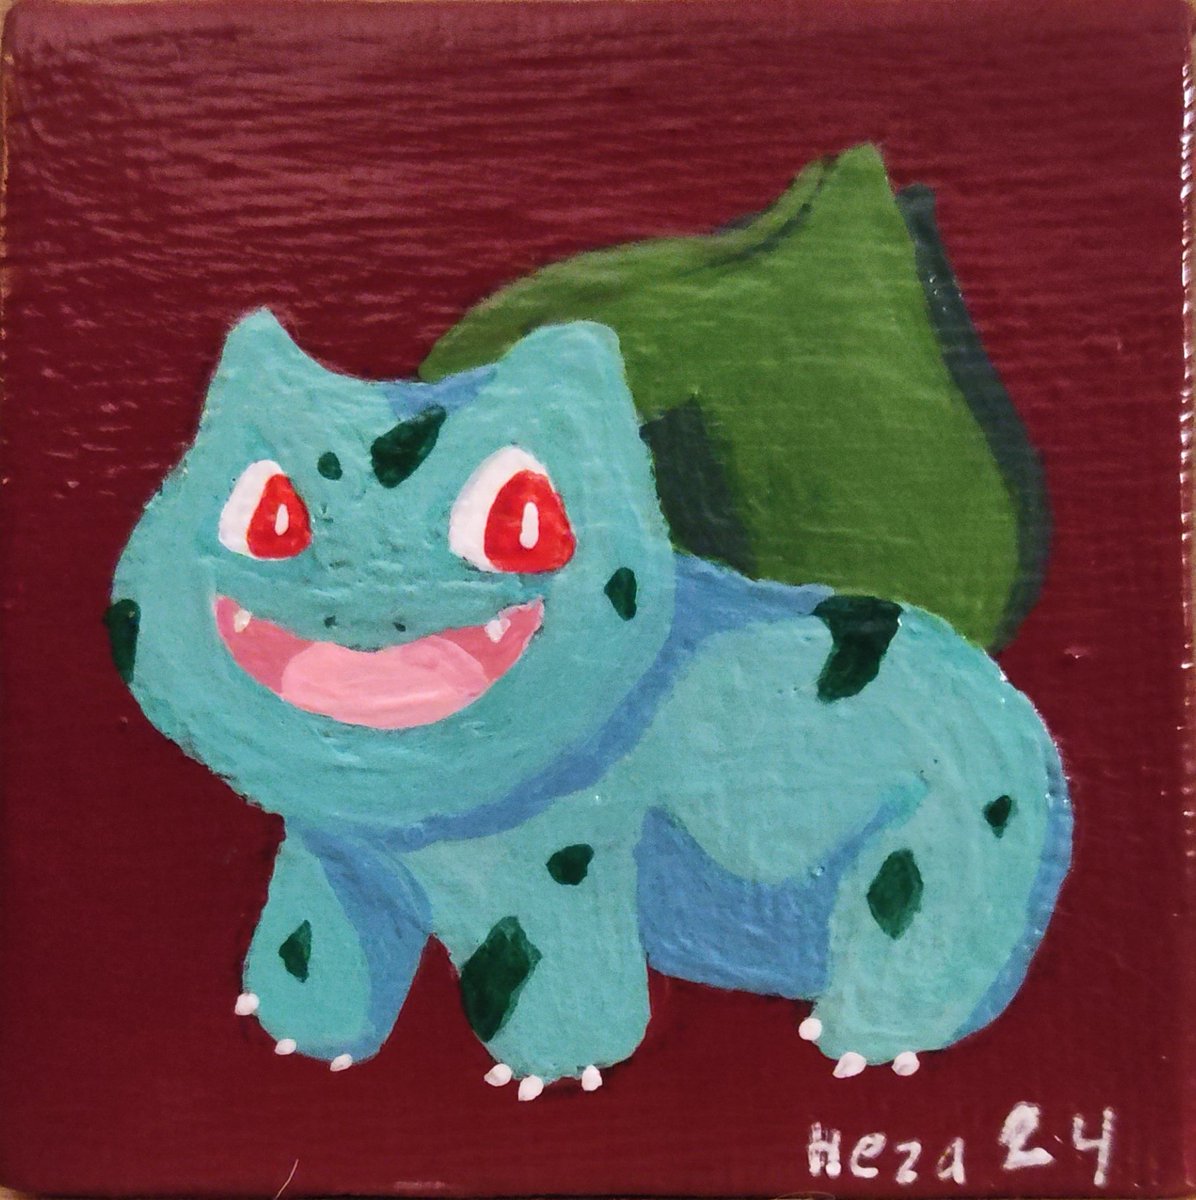 Today's mini painting... A friend c:

#Pokémon
#Bulbasaur
#minipainting